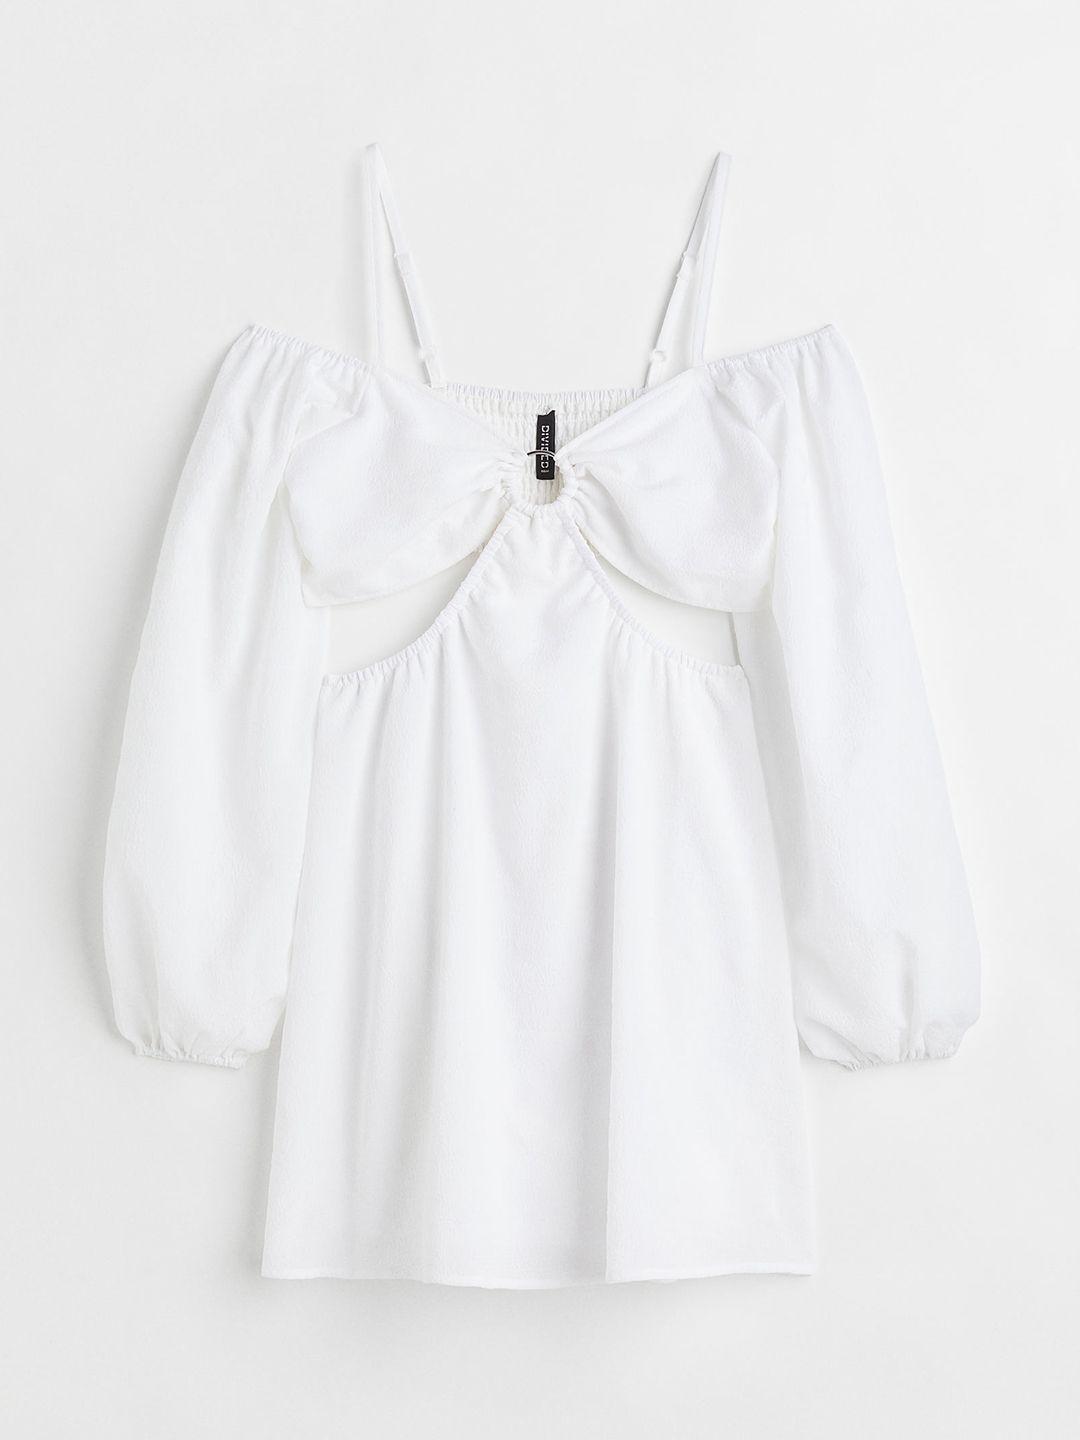 h&m women white short cut-out dress